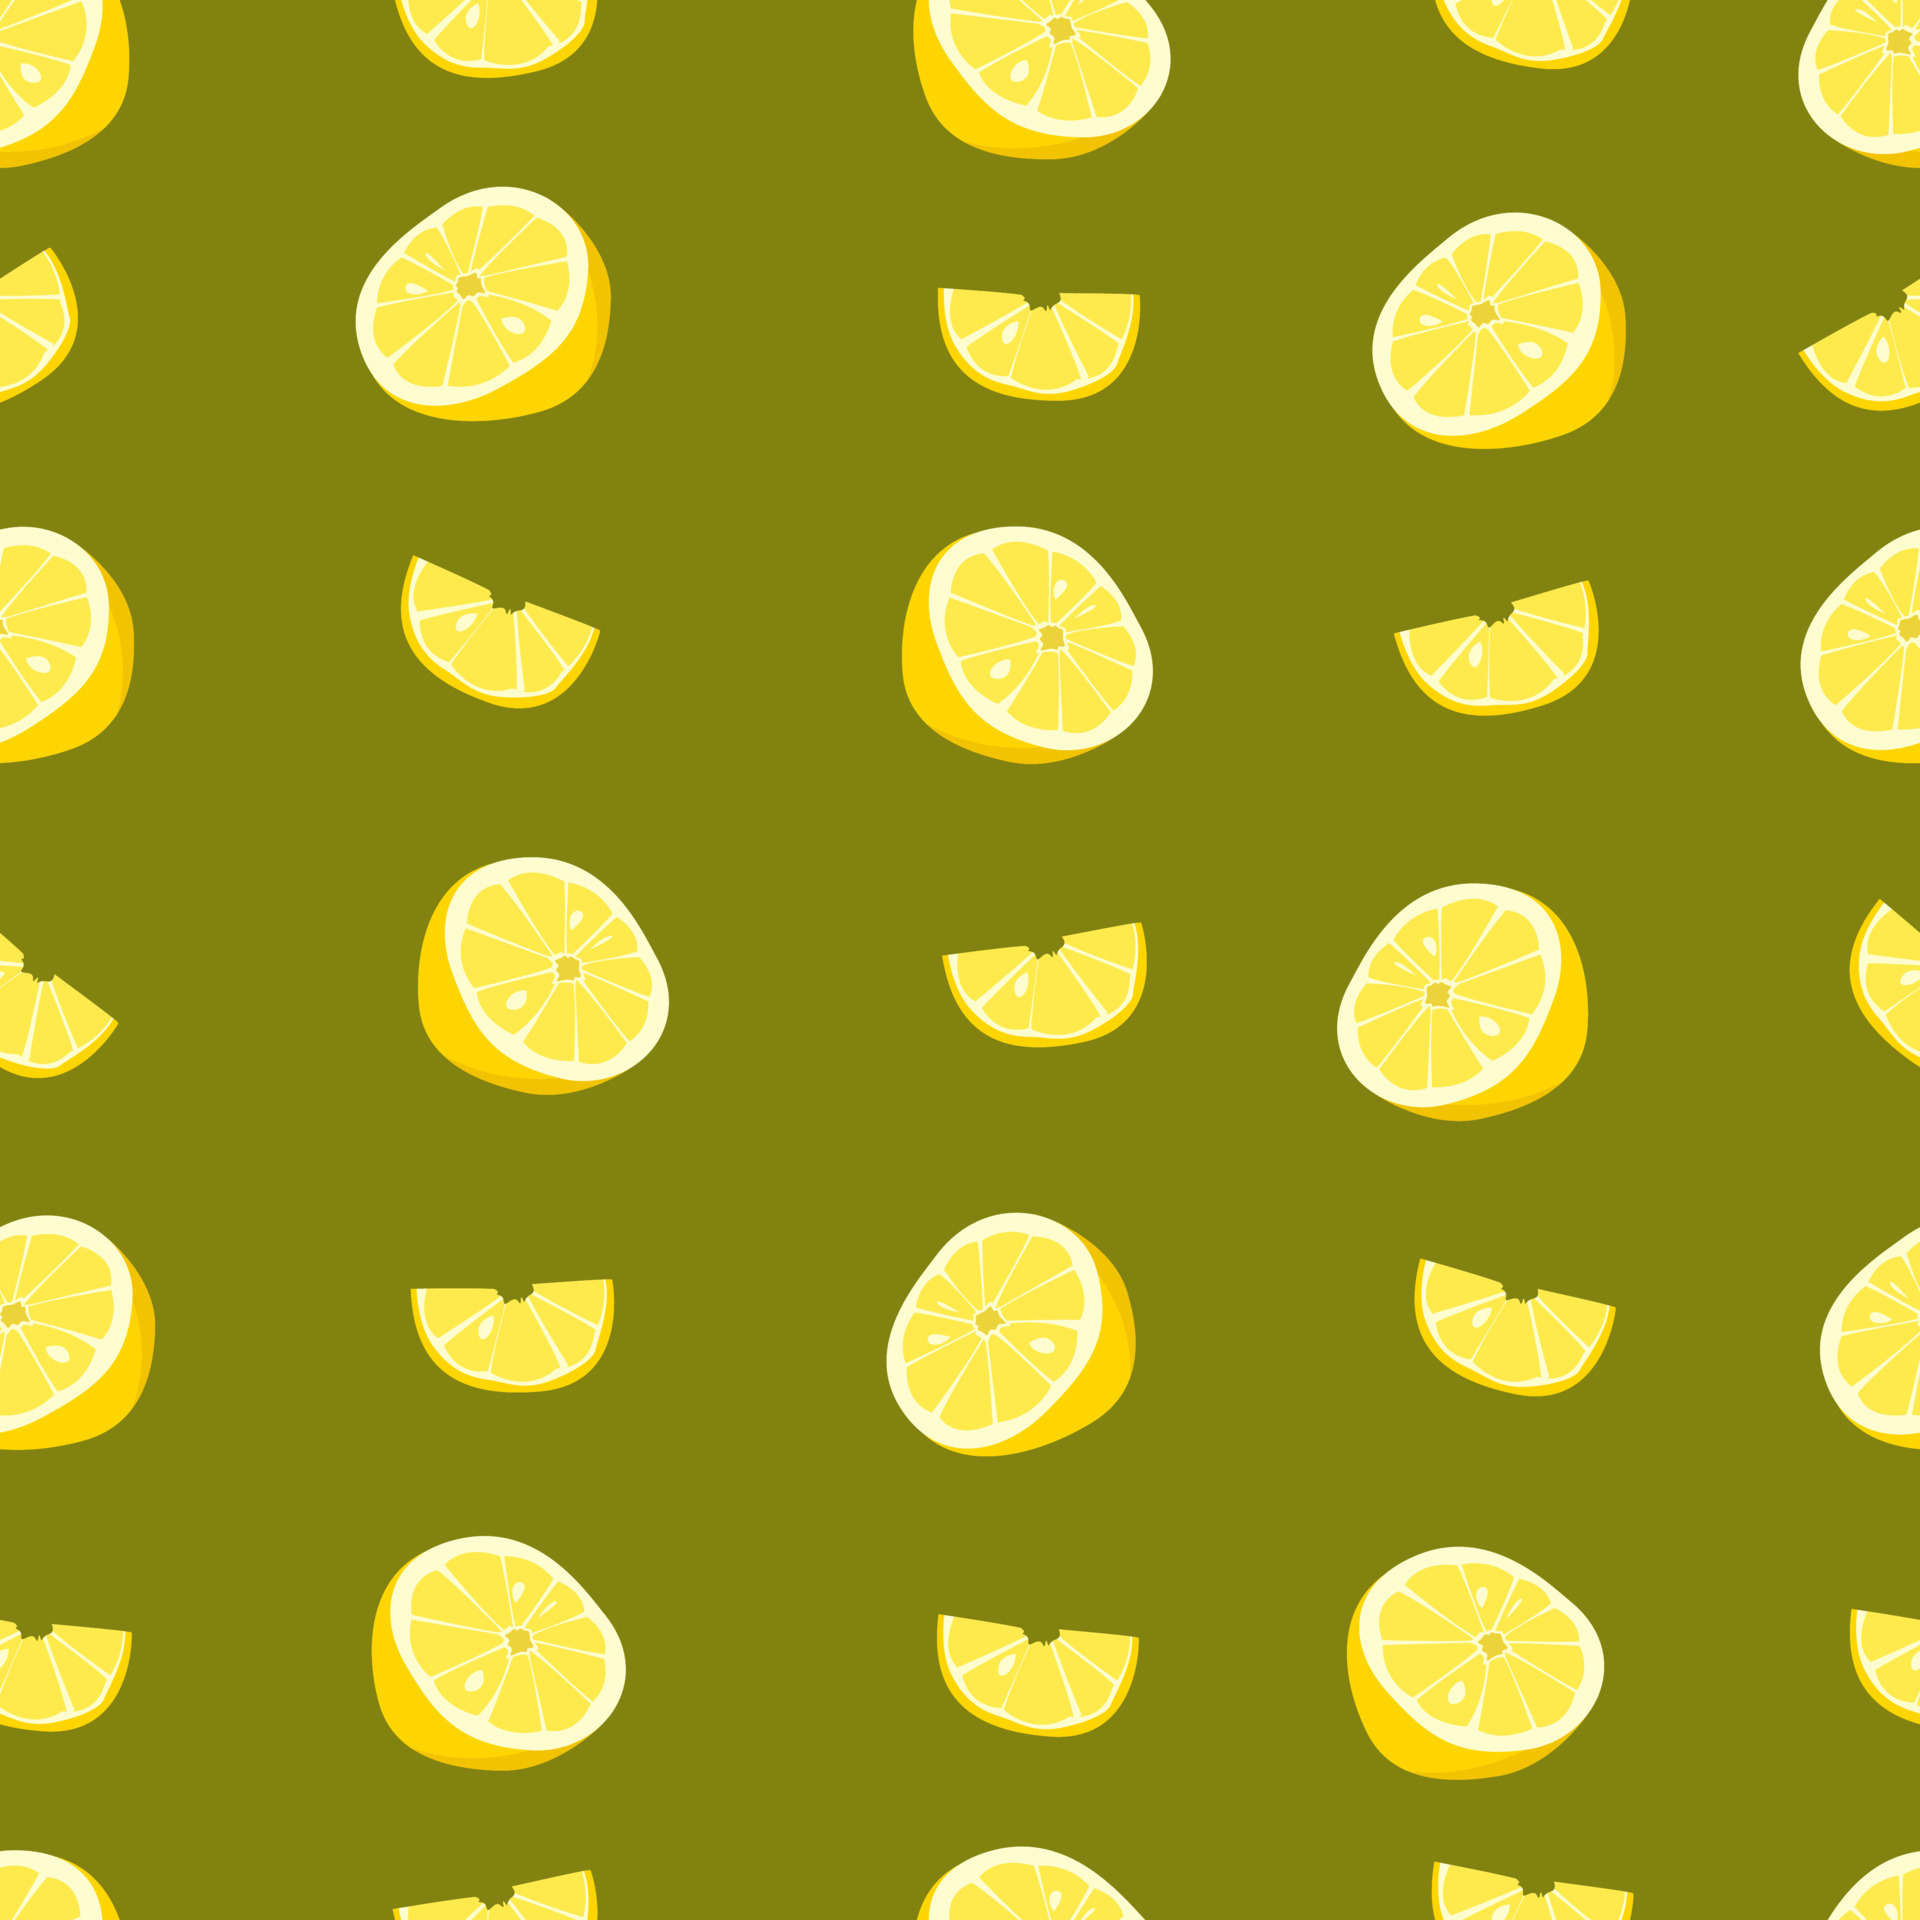 Lemon Pattern Wallpaper Background Wallpaper Image For Free Download   Pngtree